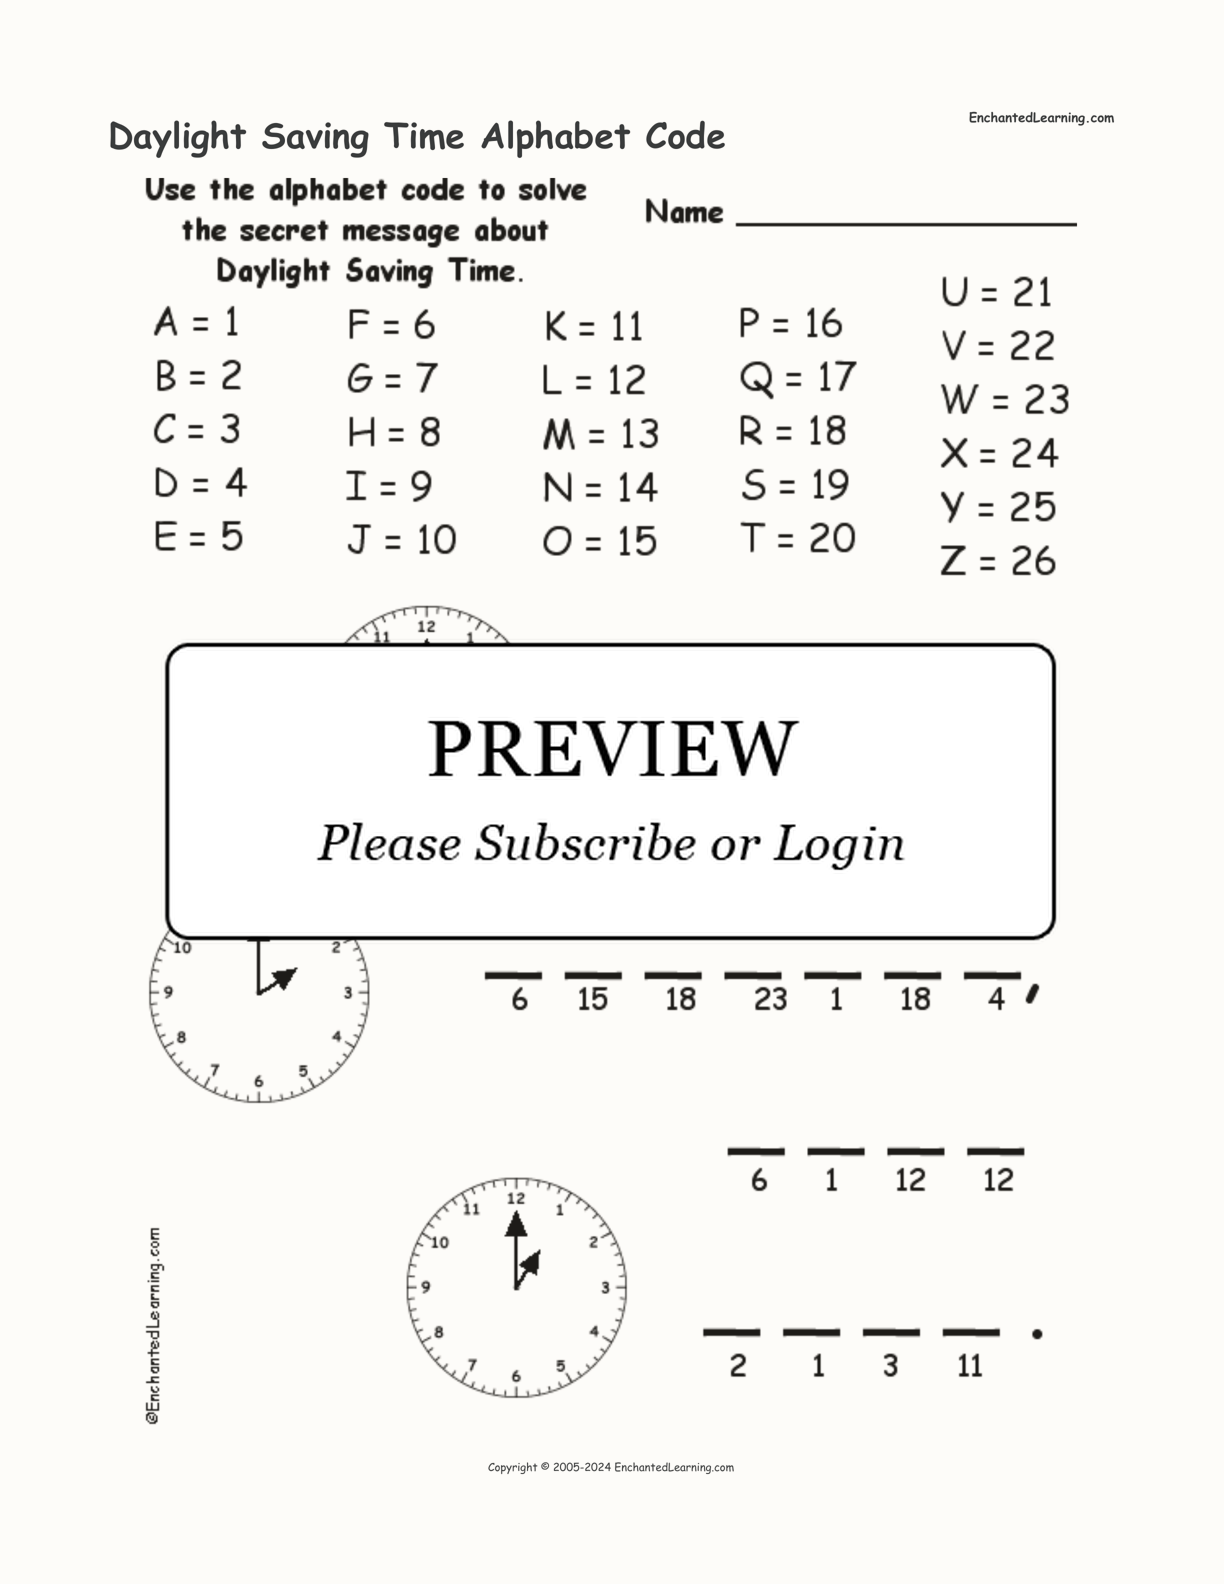 Daylight Saving Time Alphabet Code interactive worksheet page 1